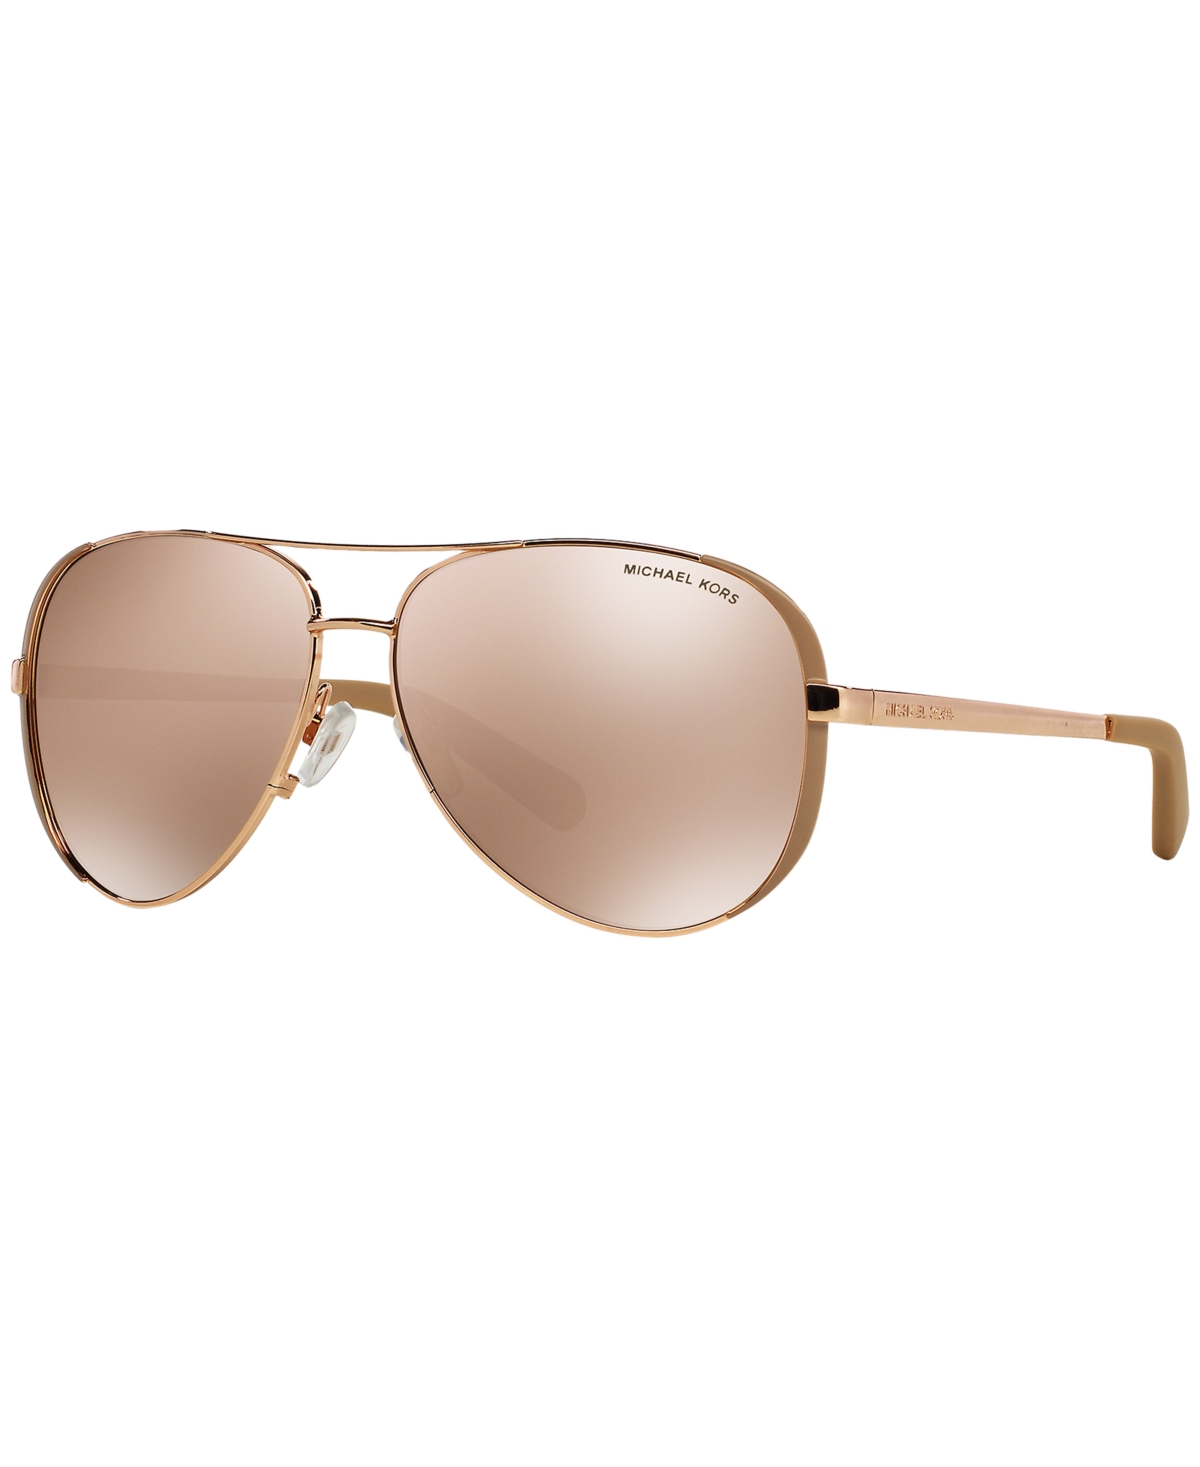 Michael Kors Women's Sunglasses, Mk5004 Chelsea In Pink Gold,gold Mirror